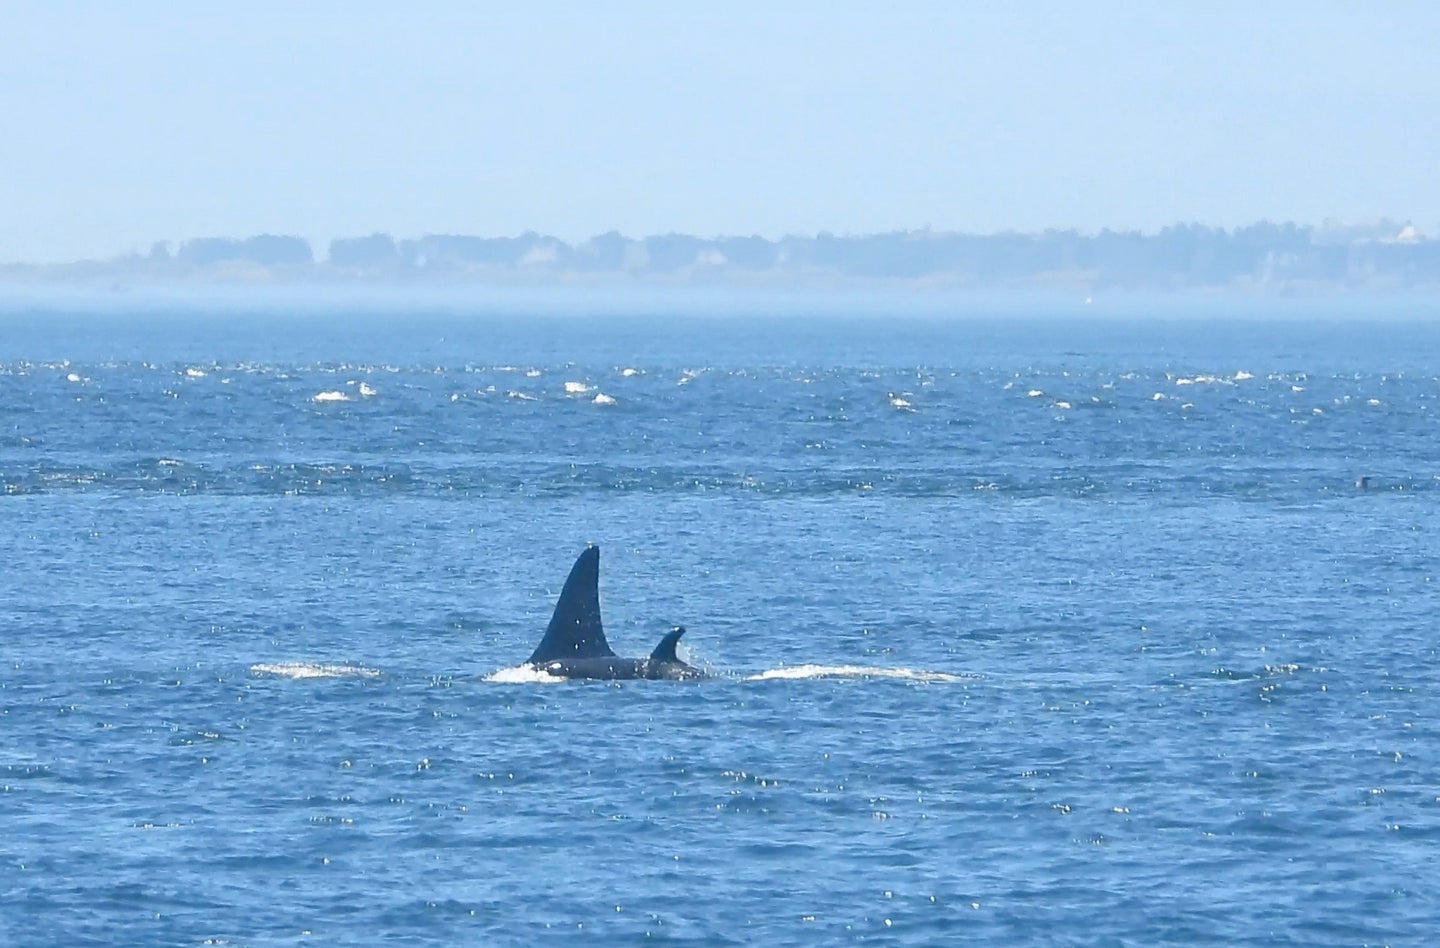 Baby orca next to adult in the Salish Sea near Washington